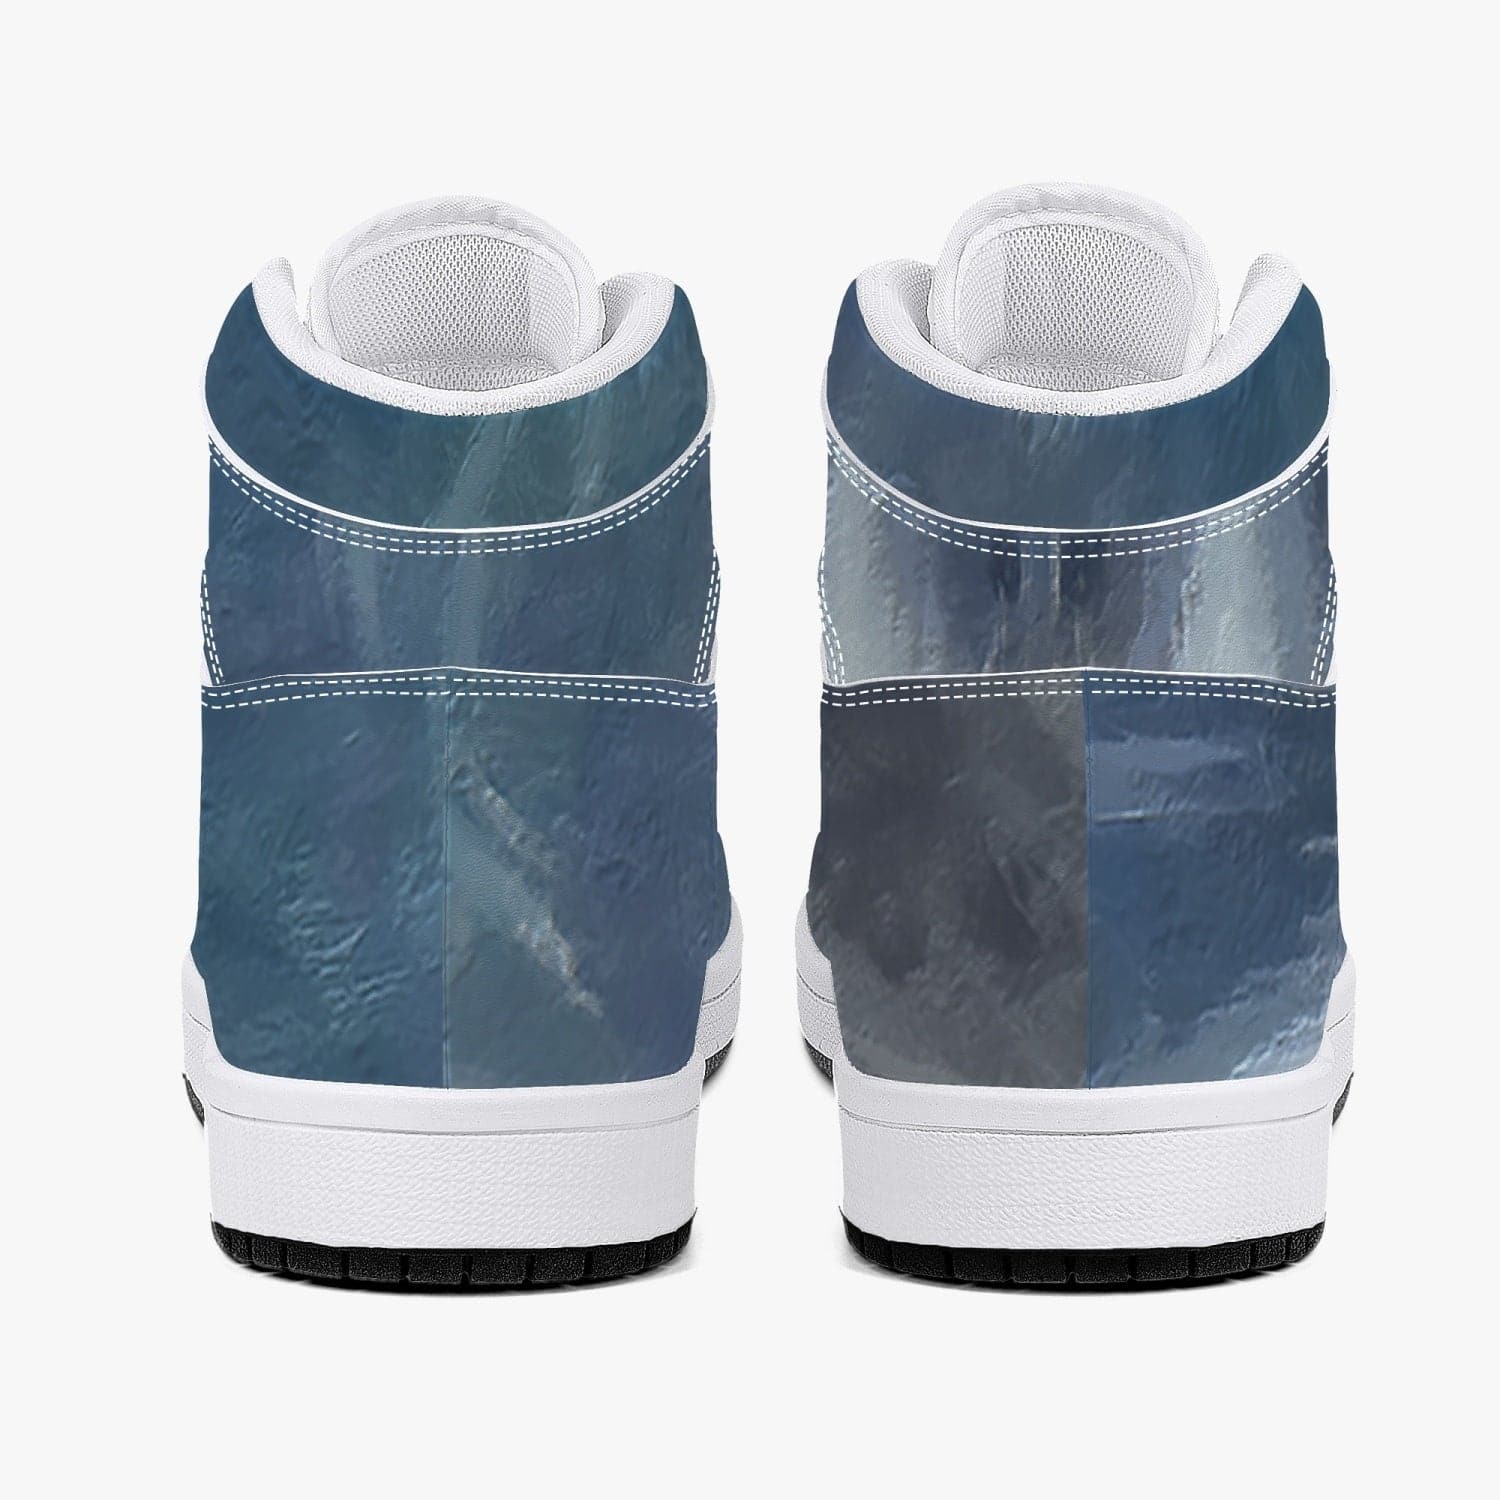 'Caelis' High-Top Leather Sneakers - White / Black at Sensus Studio, designer: Humphrey Isselt